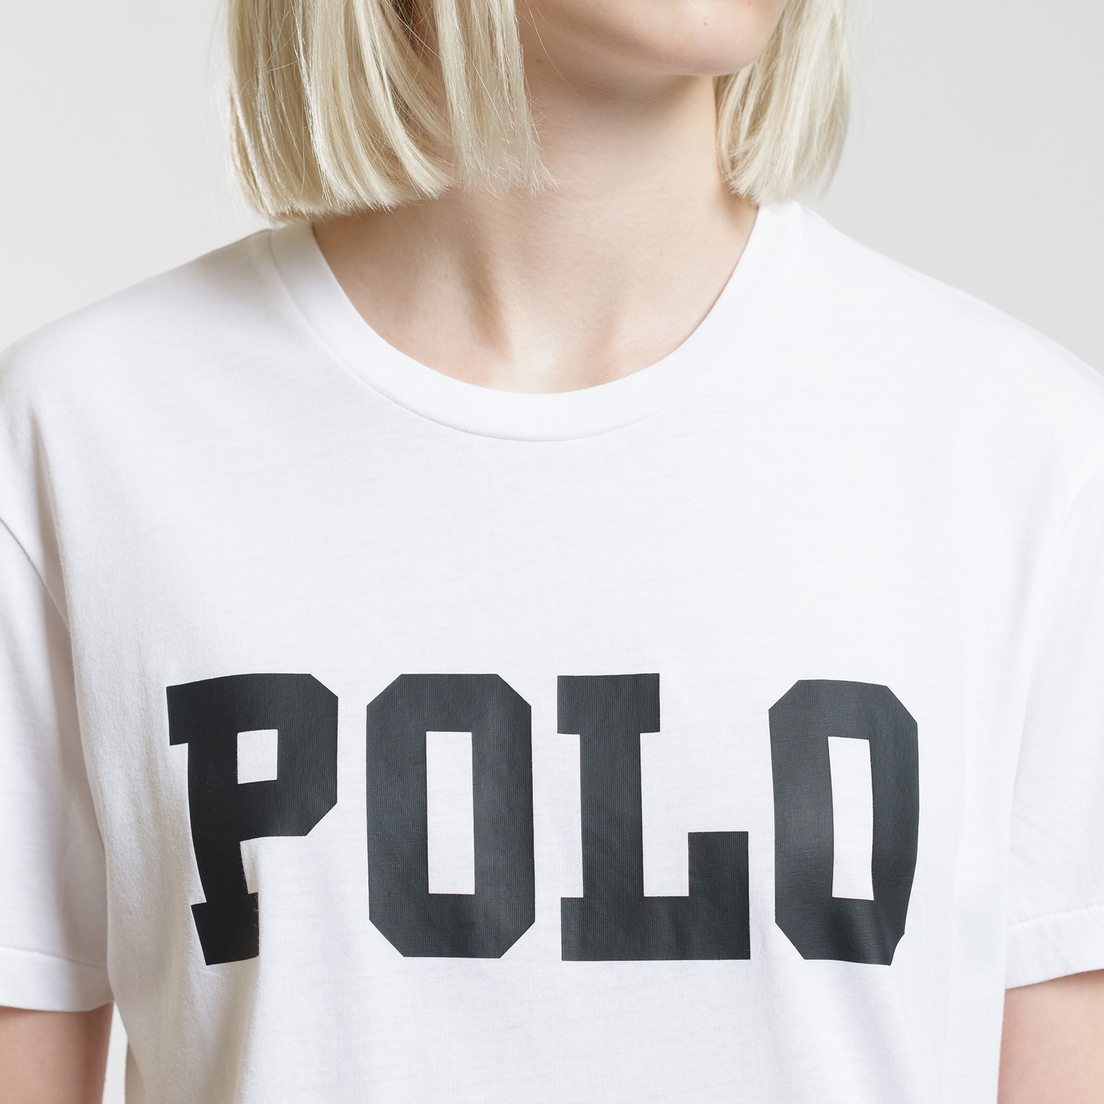 Polo Ralph Lauren Женская футболка Big Polo Print